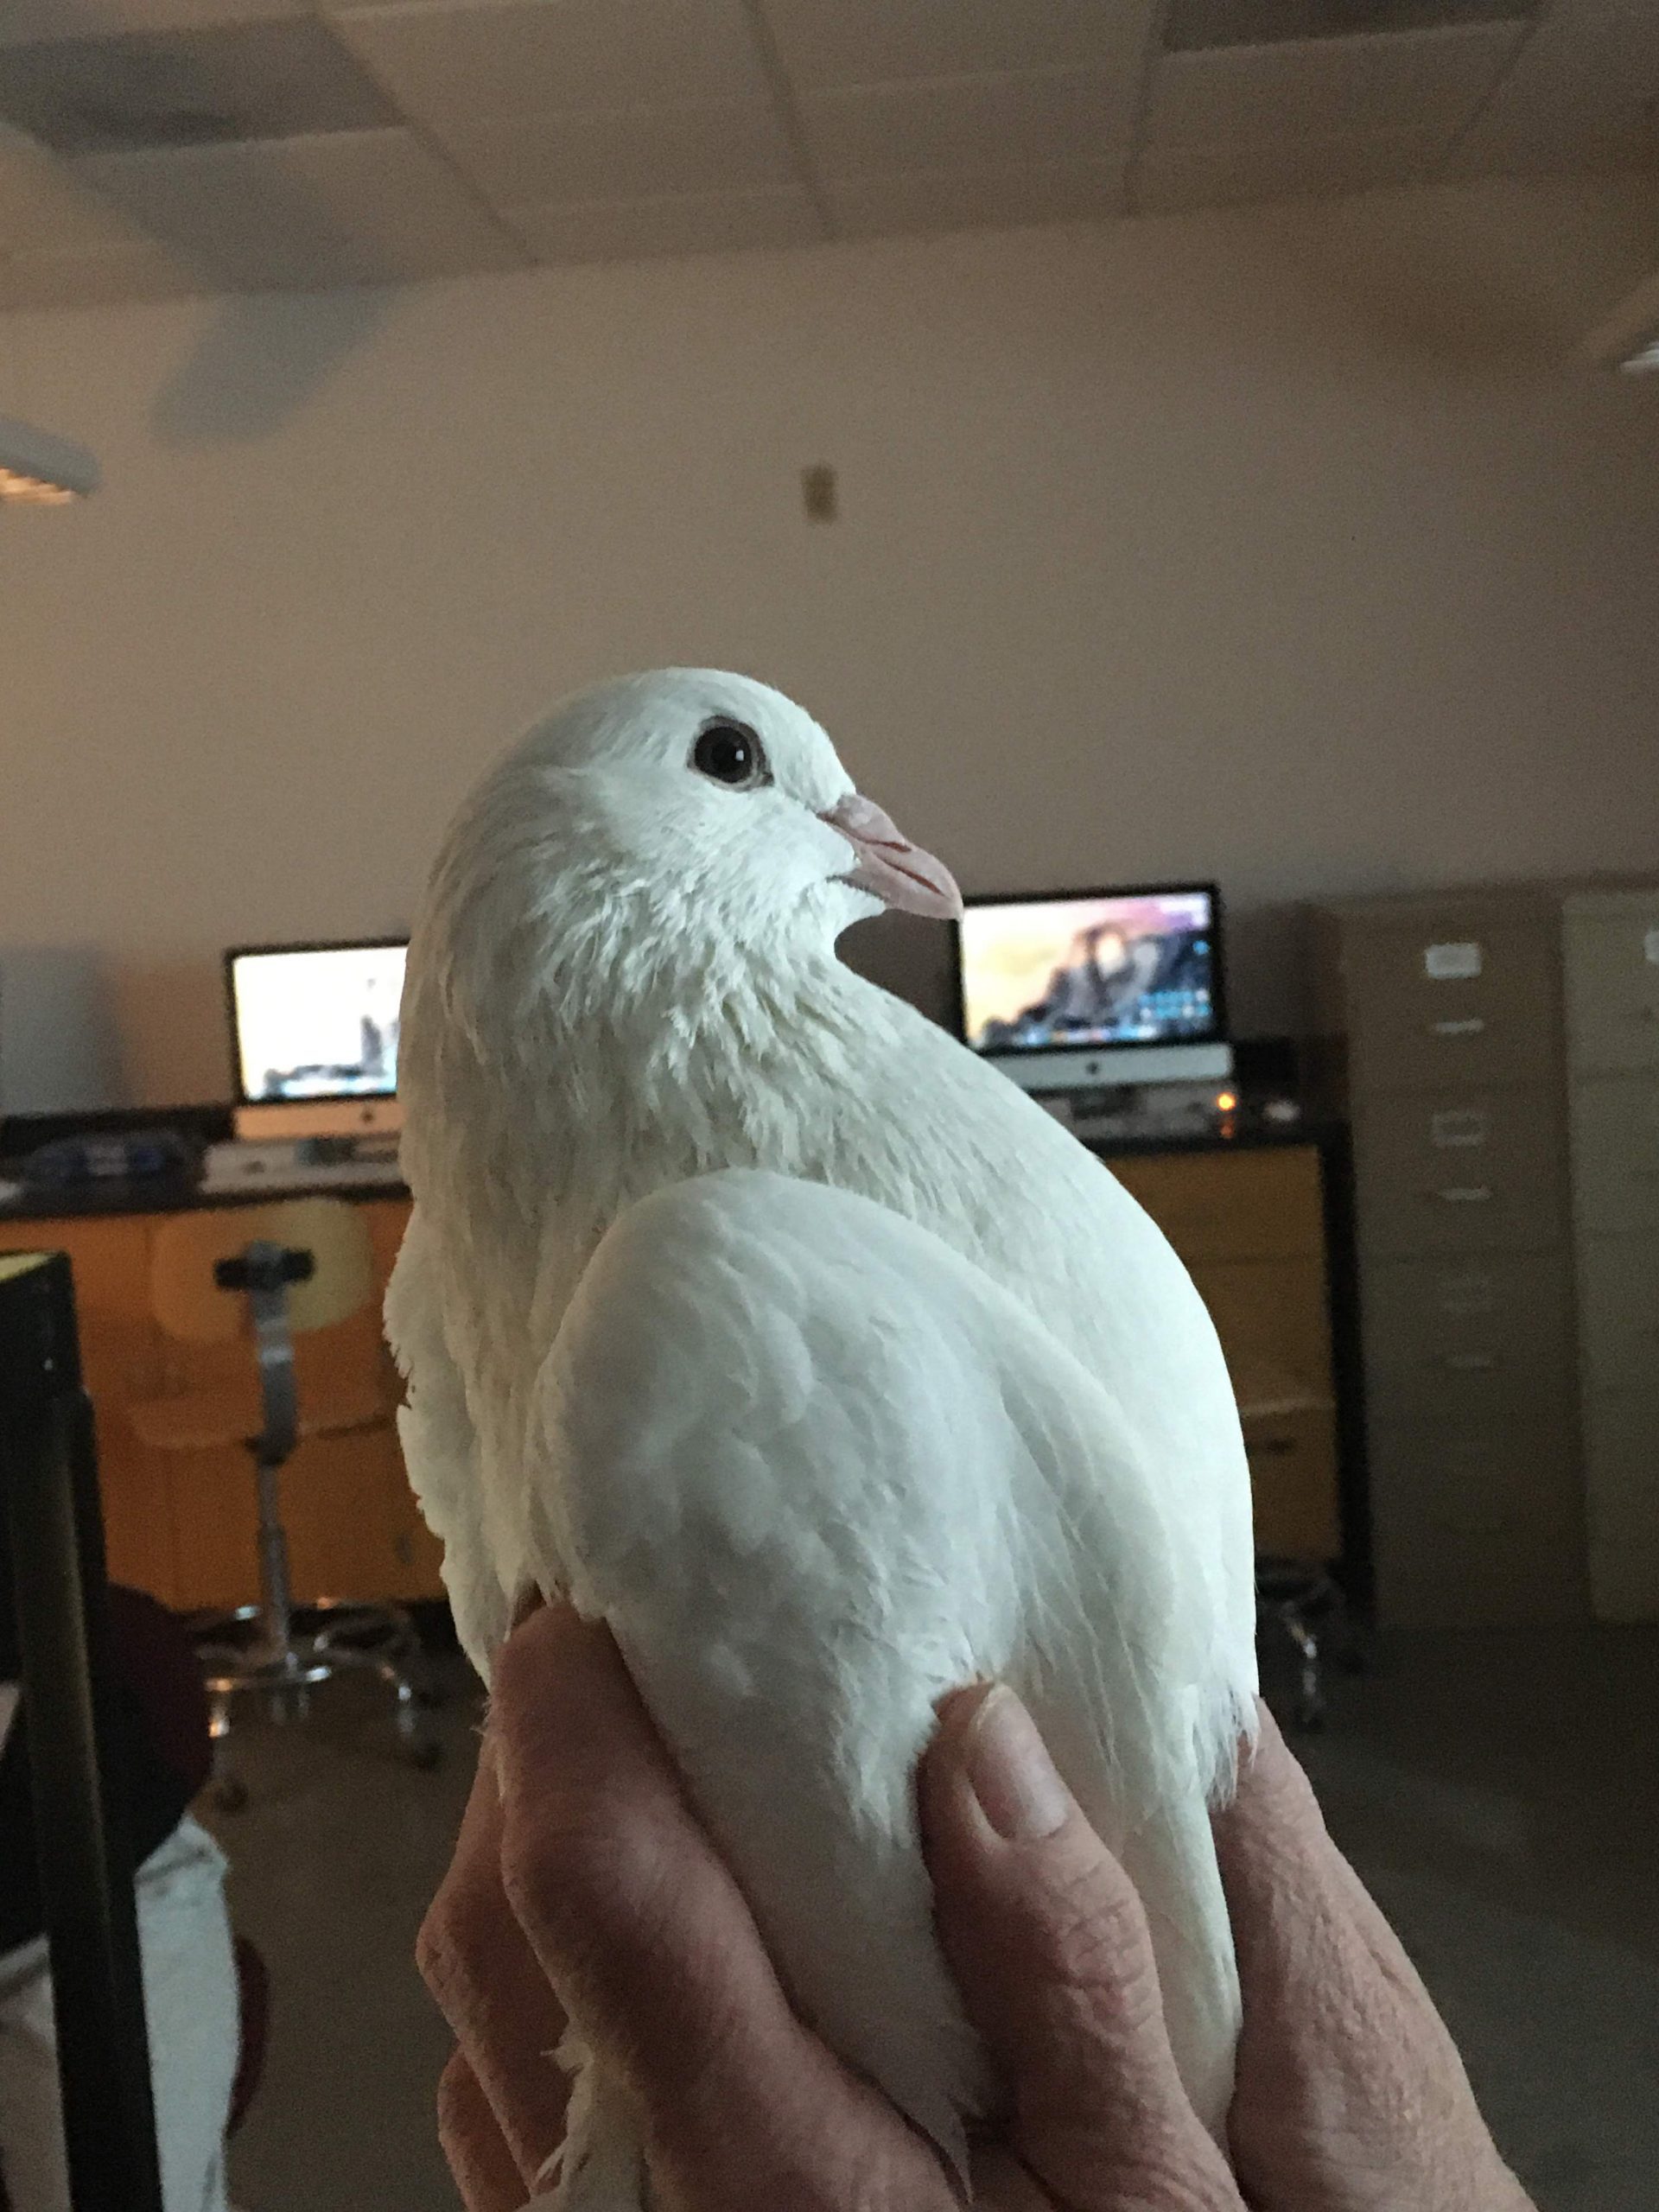 A white pigeon named Corny